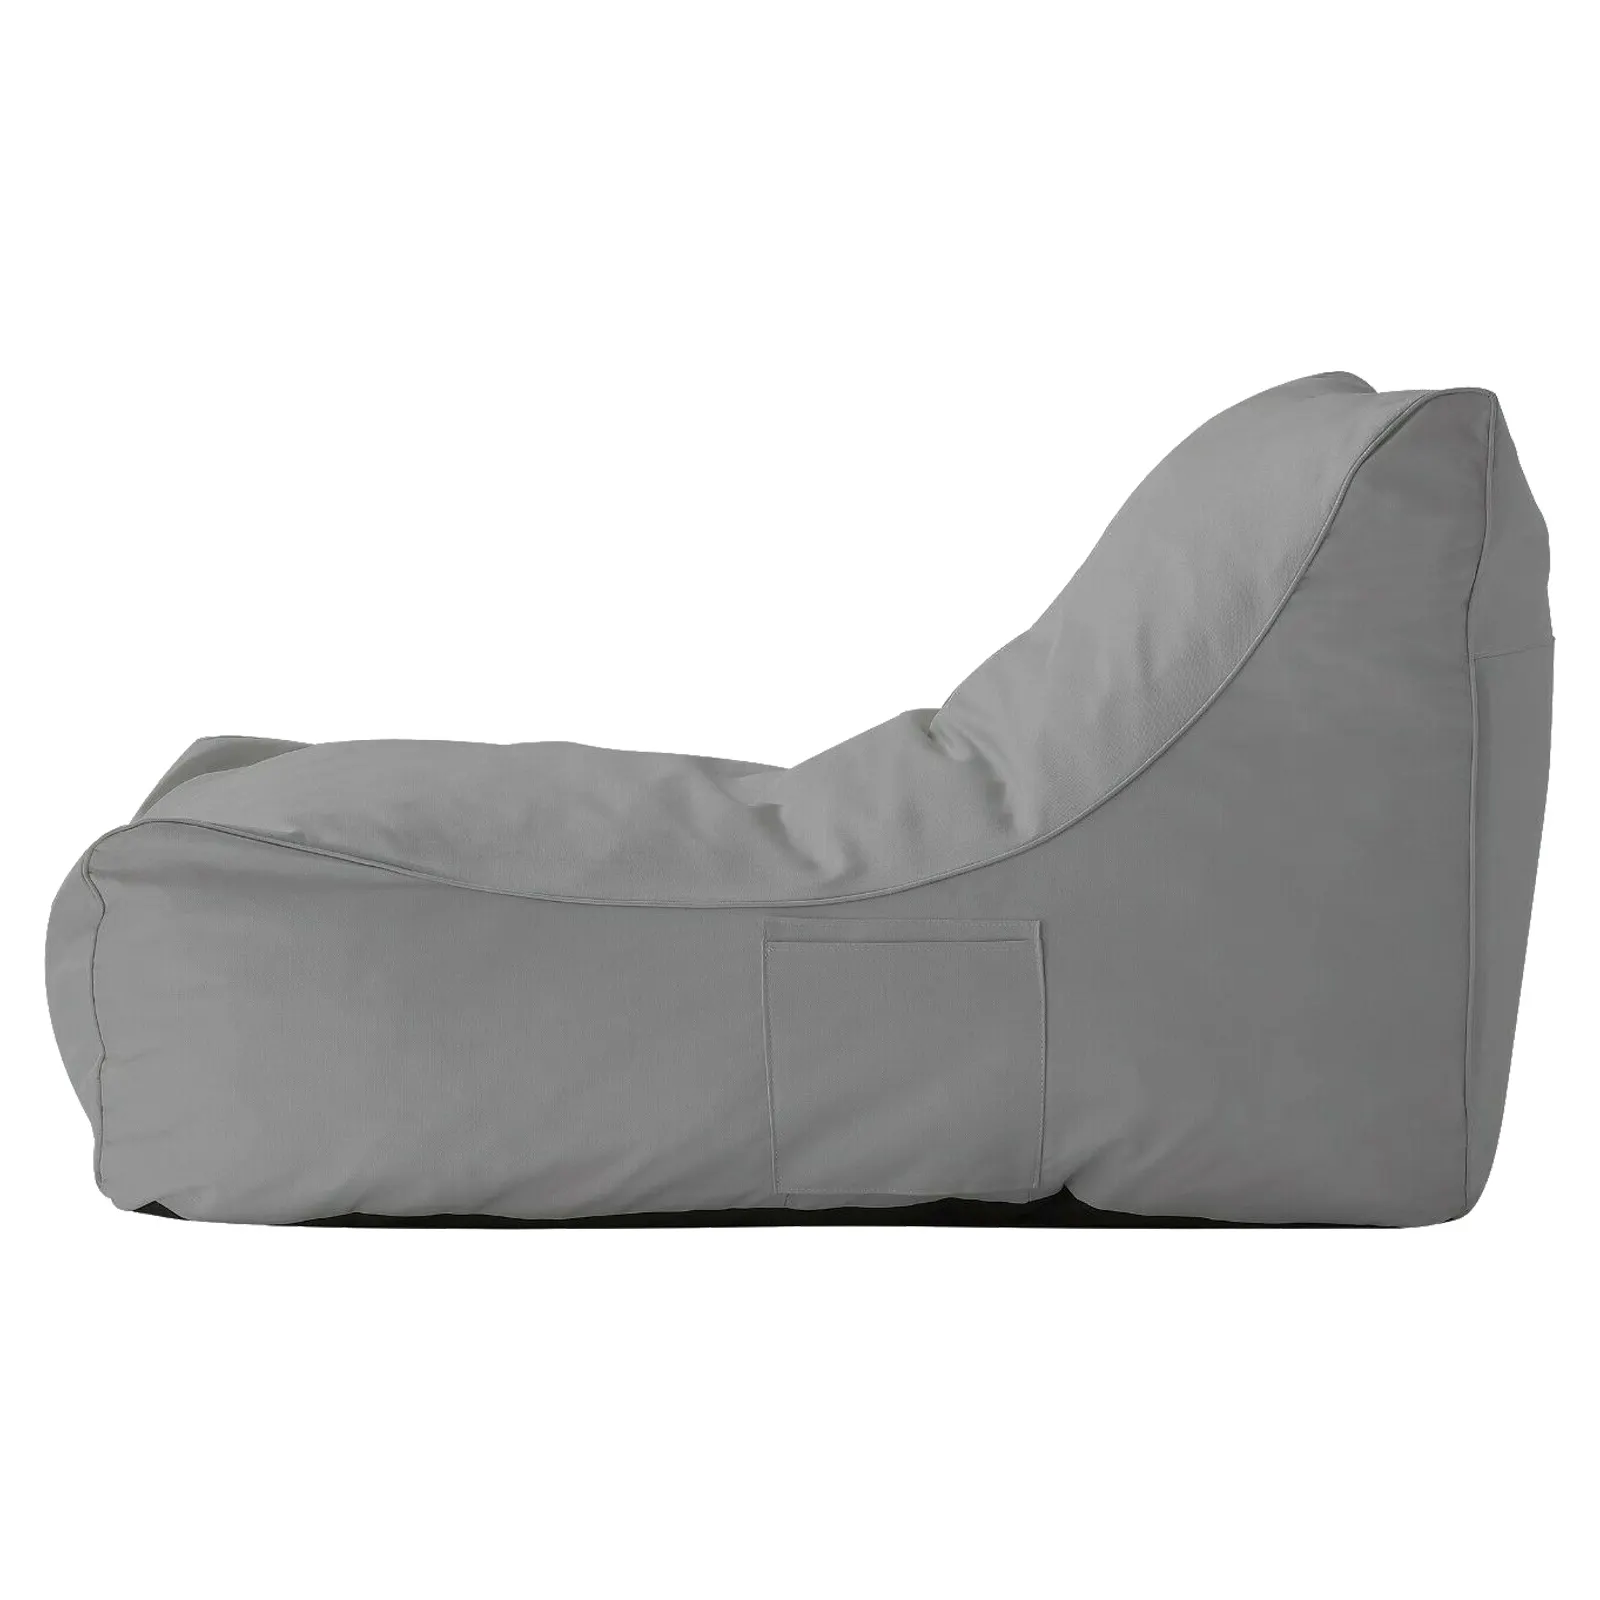 Fundas de sofá impermeables impresas para exteriores, PUF de Luna grande sin relleno de punto, personalizado, jumbo bean bag